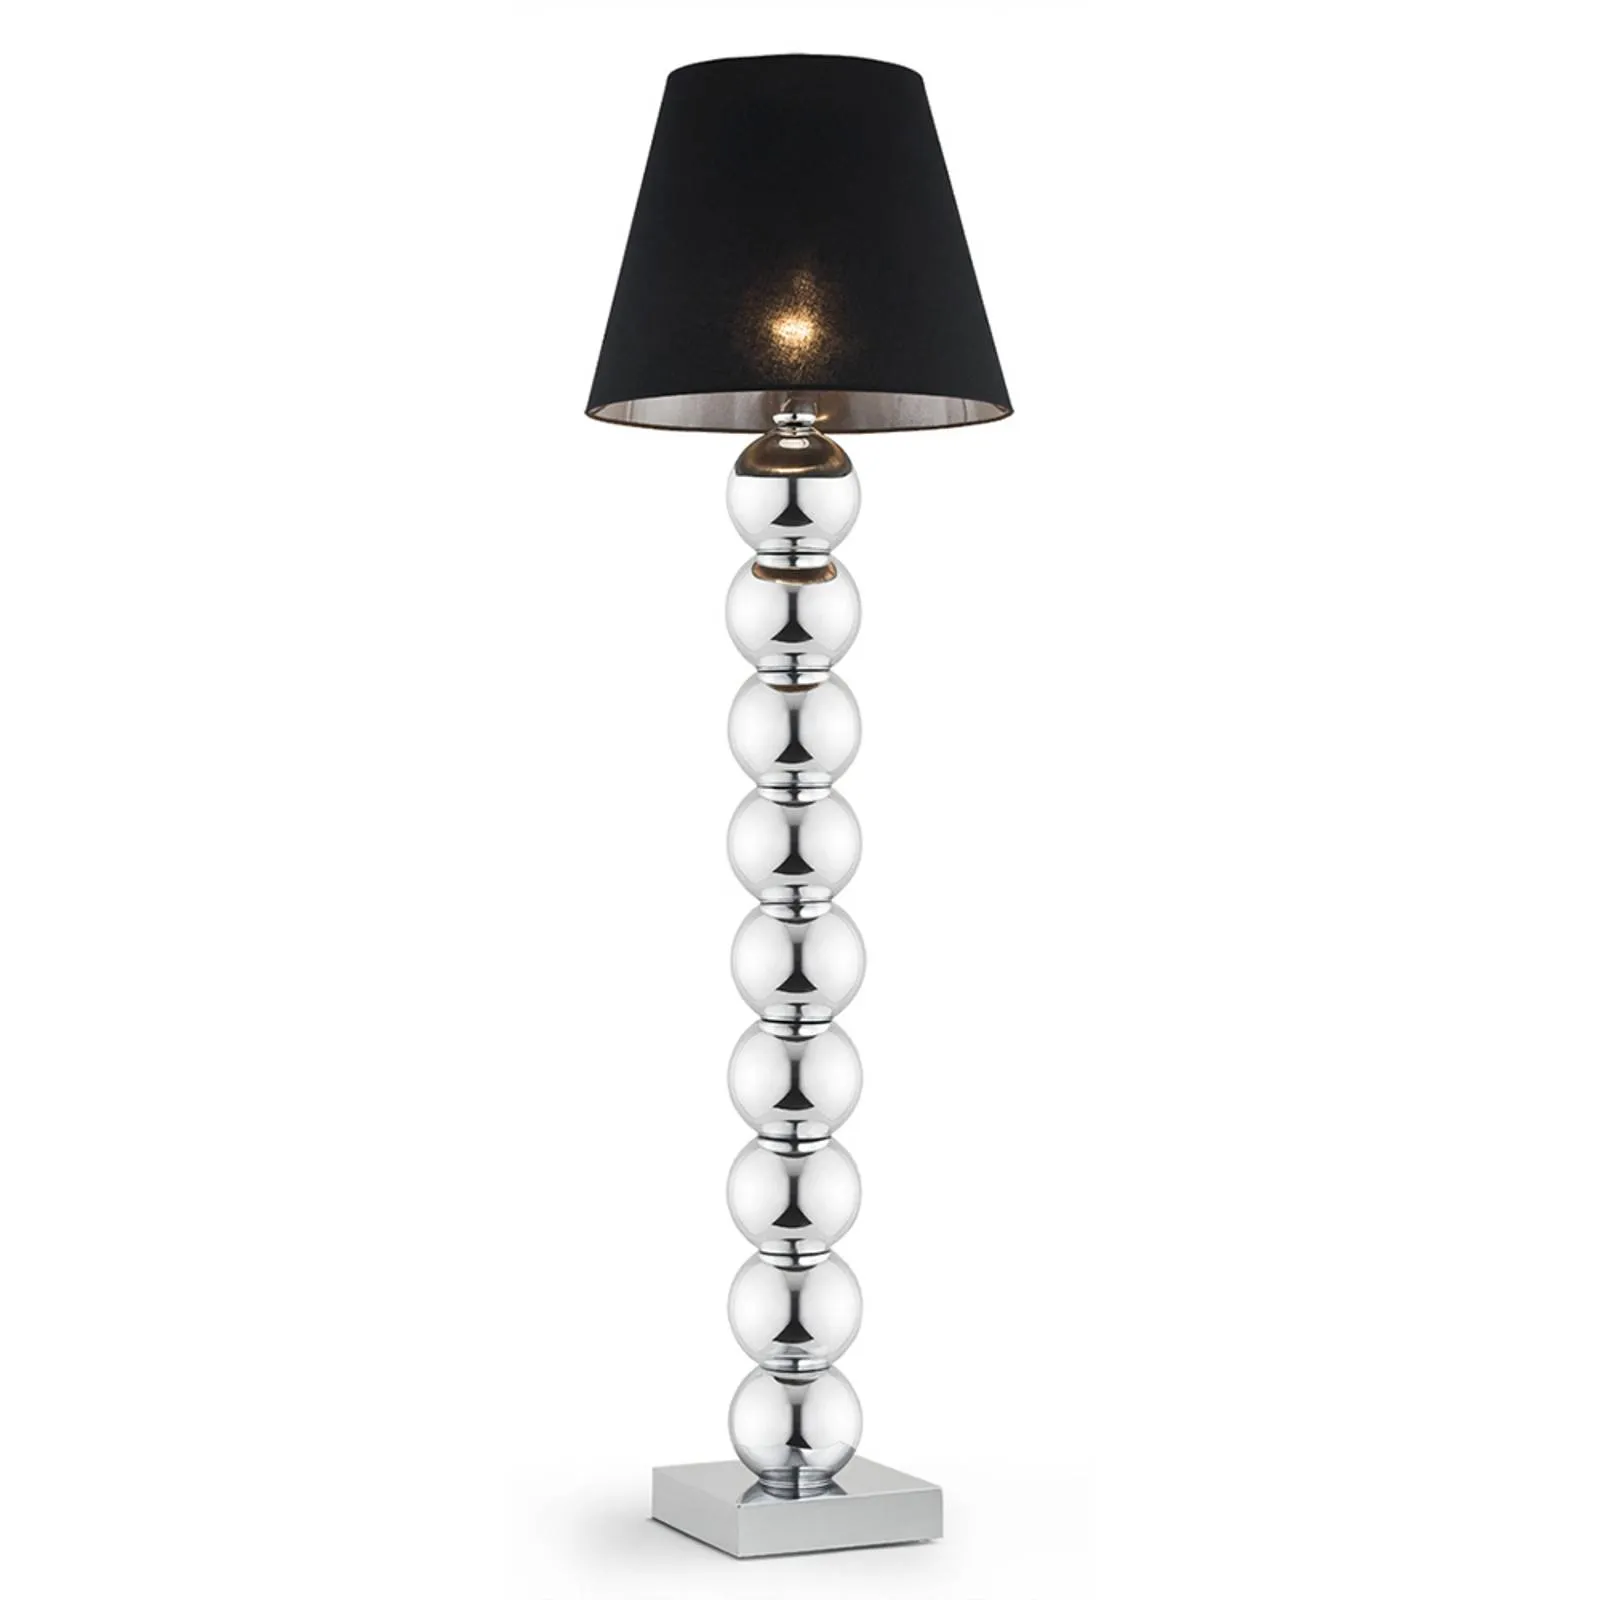 Fulda floor lamp, black lampshade, chrome base